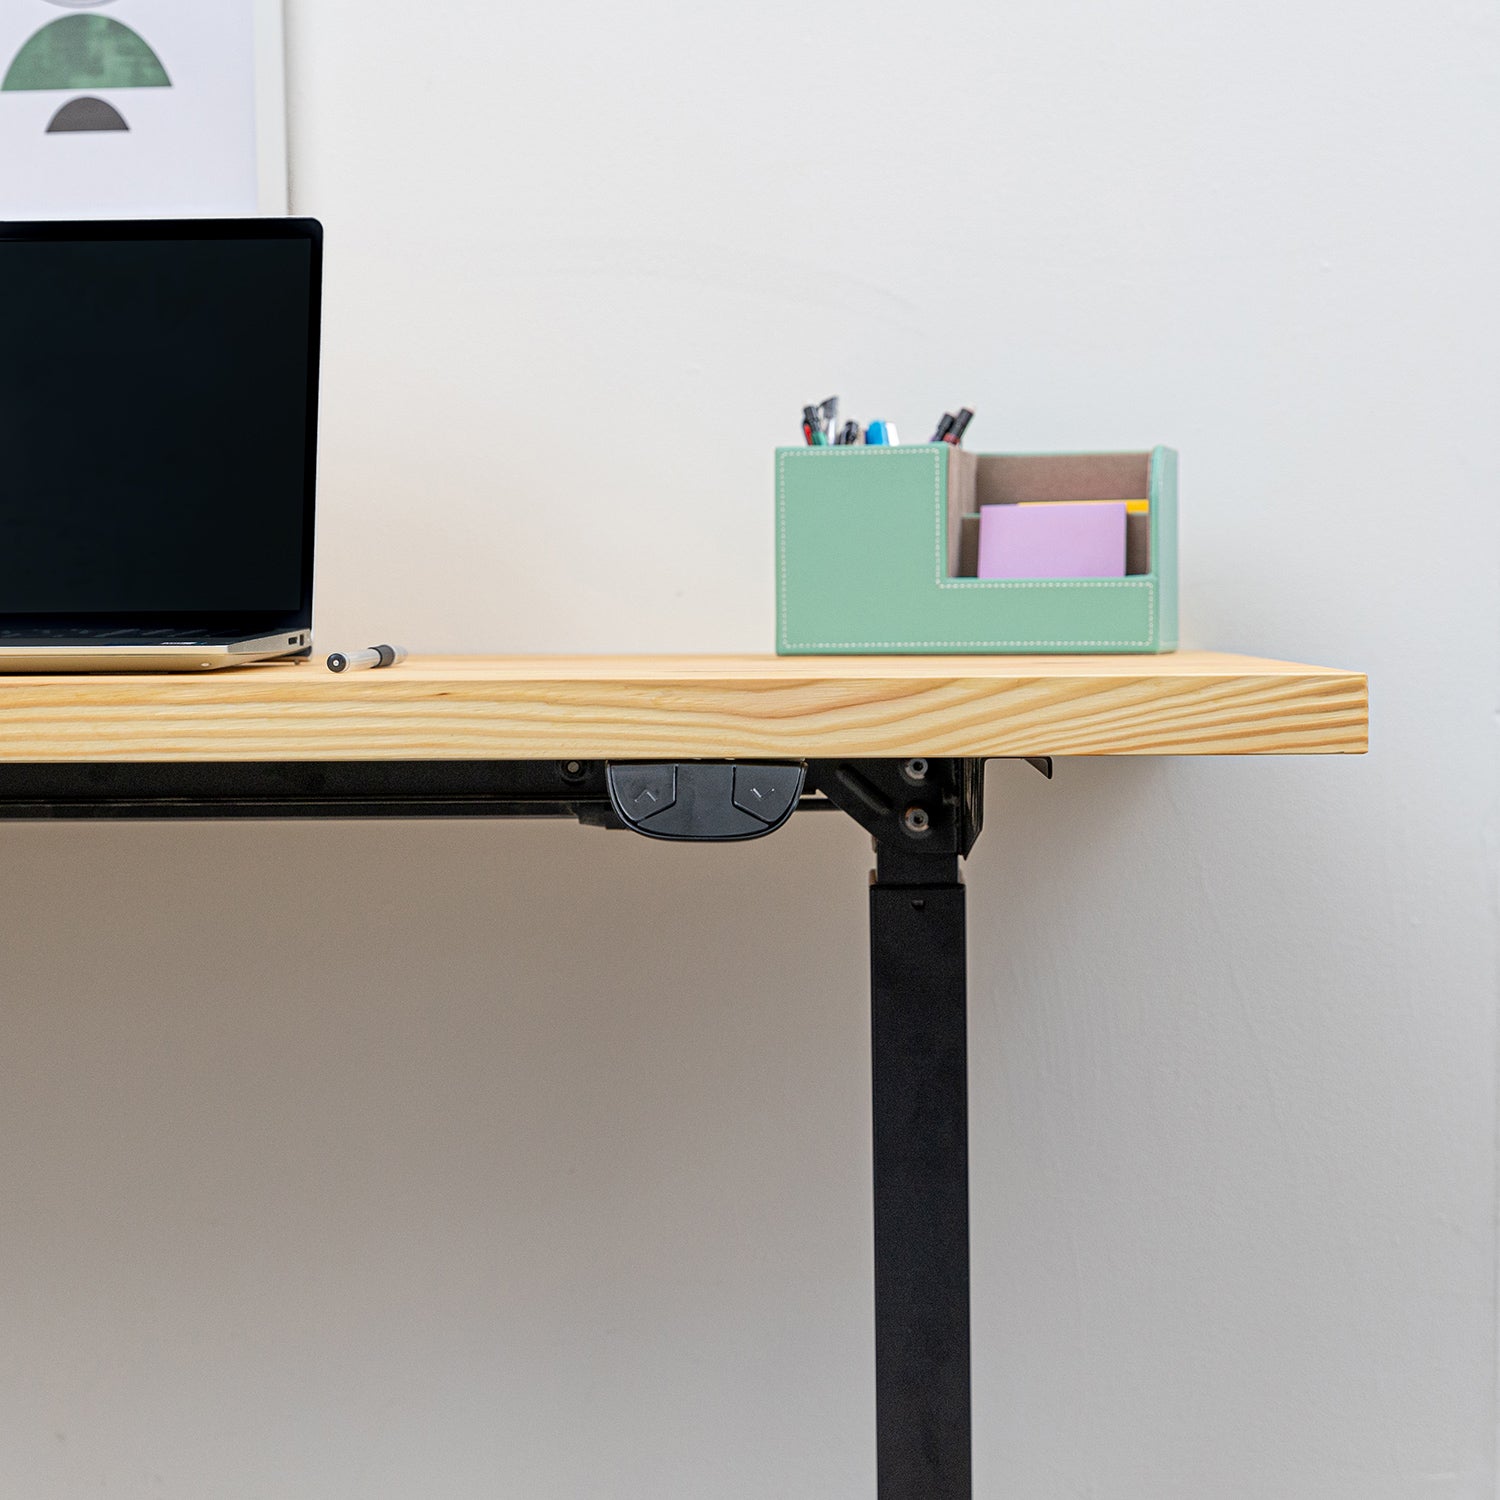 Electric Height Adjustable Standing Desk with Pine Solid Wood Desktop